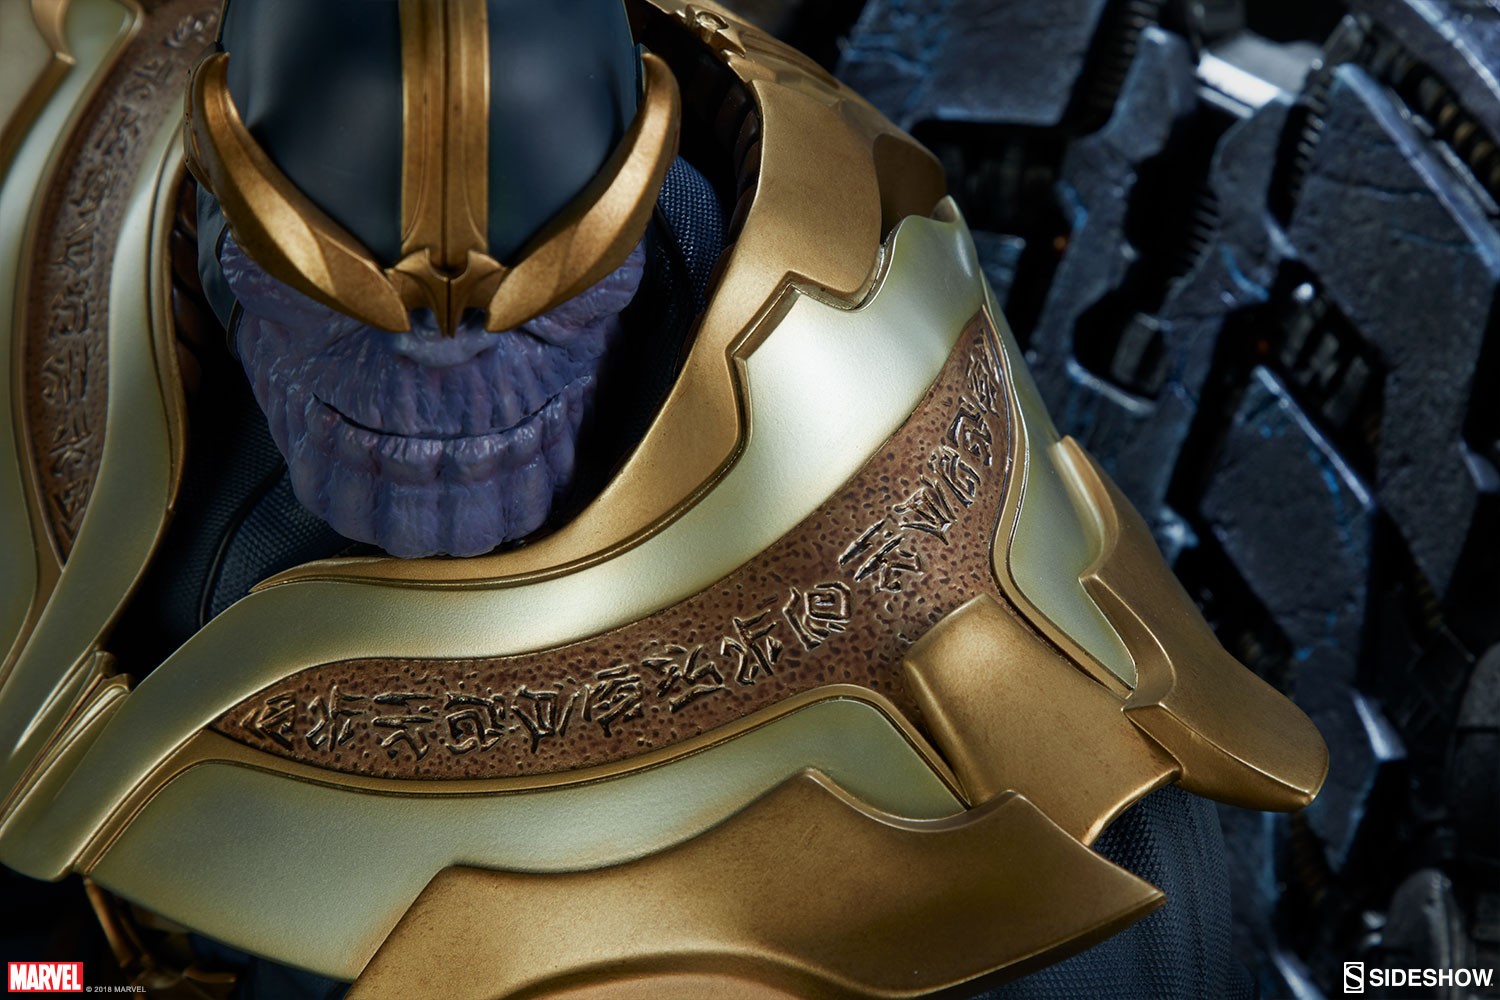 Thanos on Throne Exclusive Edition (Prototype Shown) View 20